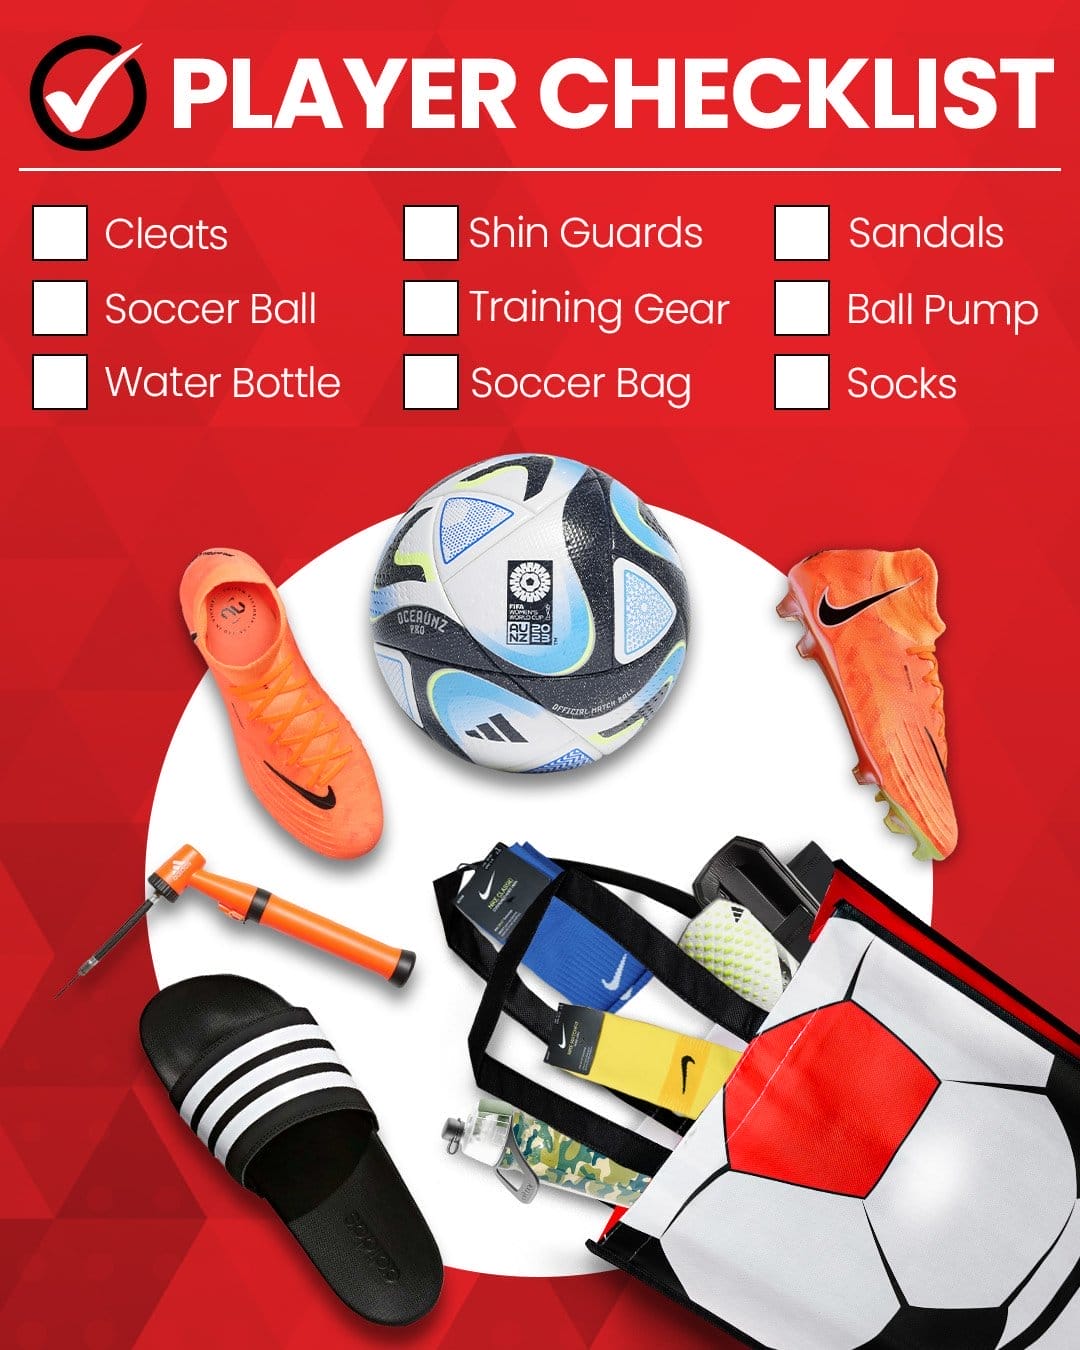 PLAYER CHECKLIST: Cleats, Soccer Ball, Water Bottle, Shin Guards, Training Gear, Soccer Bag, Sandals, Ball Pump, Socks